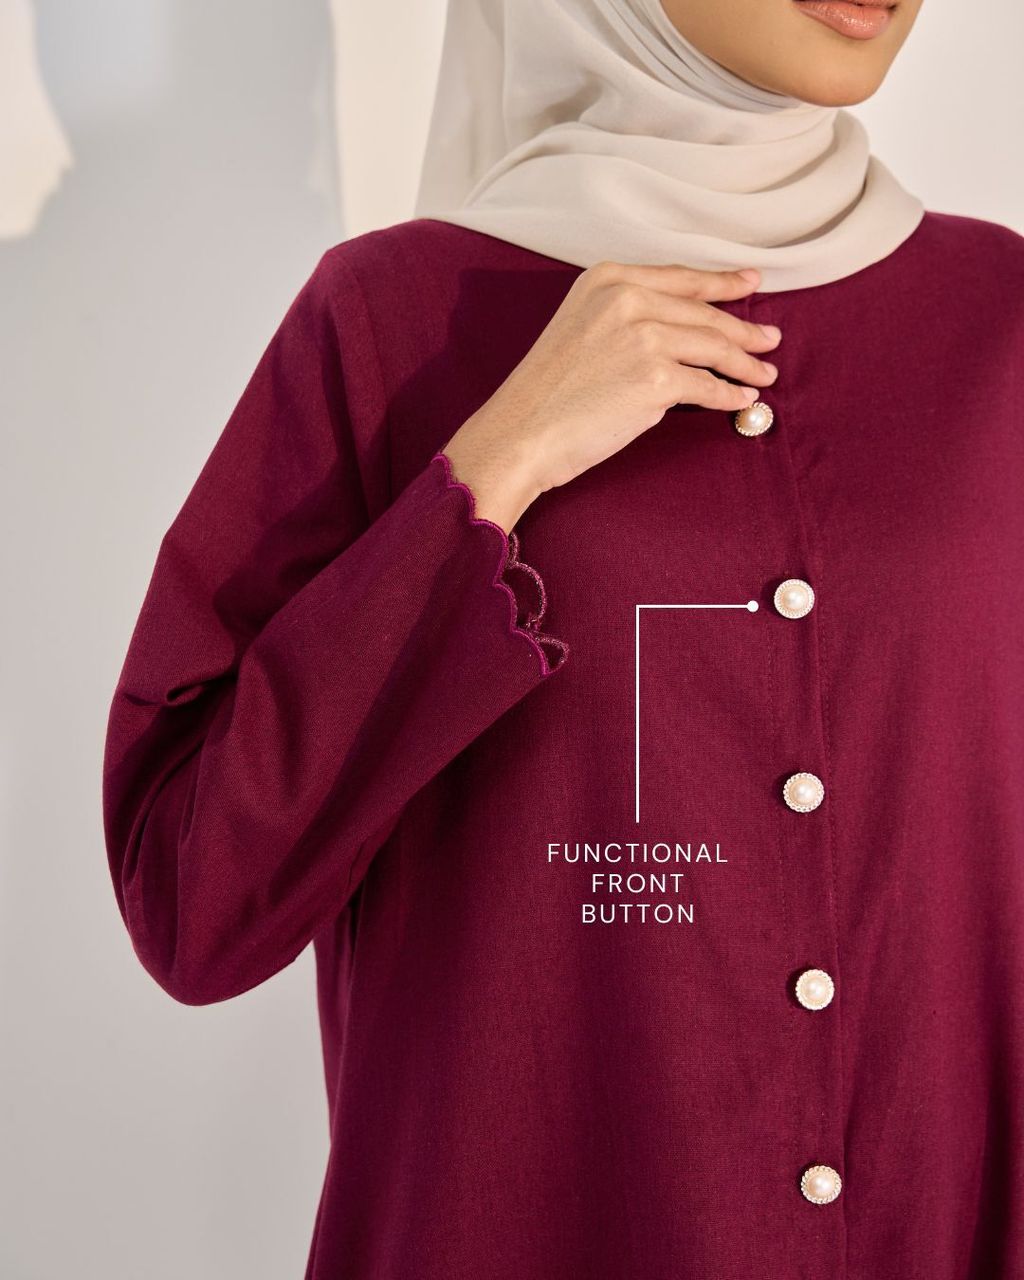 haura-wear-cotton-baju-muslimah-set-seluar-set-skirt-suit-muslimah-set-baju-dan-seluar-muslimah-palazzo (20)